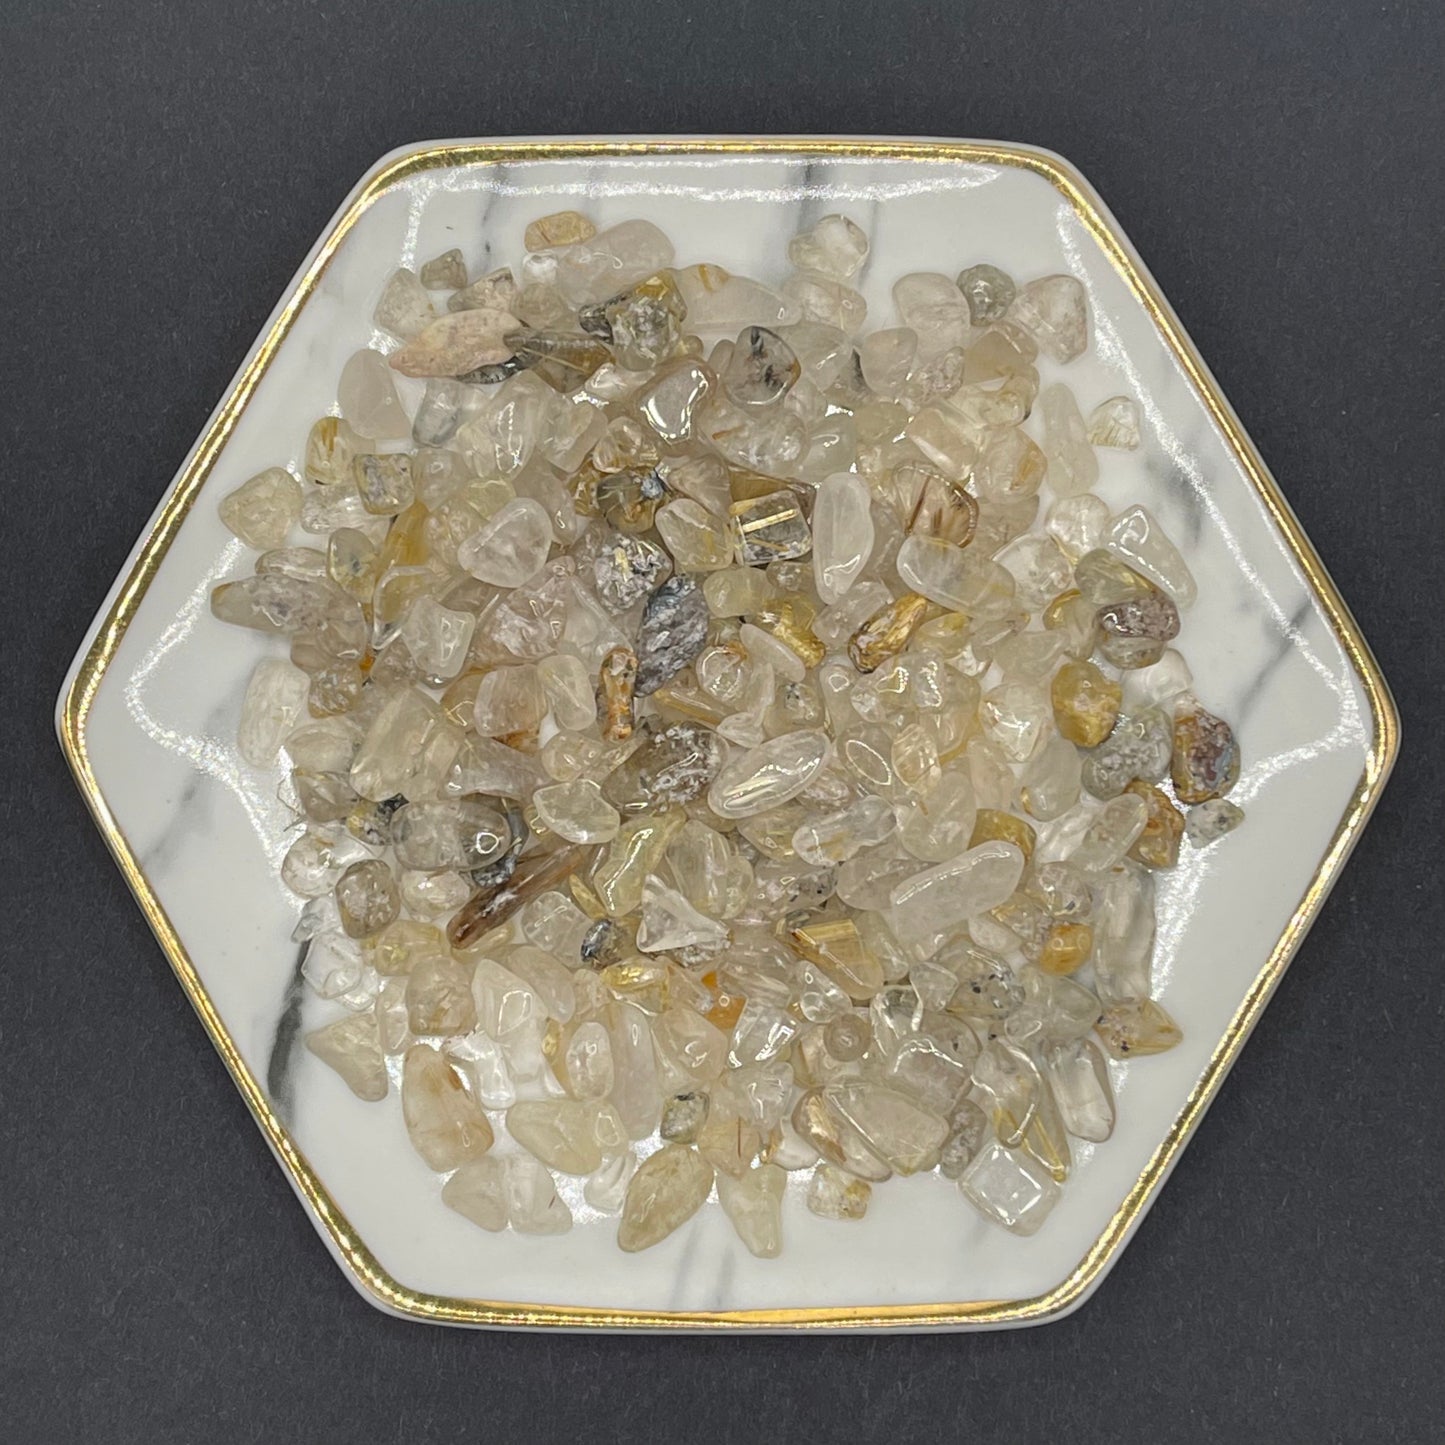 Cleanse | Golden Rutile Quartz Crystal Chips 10ml Vial